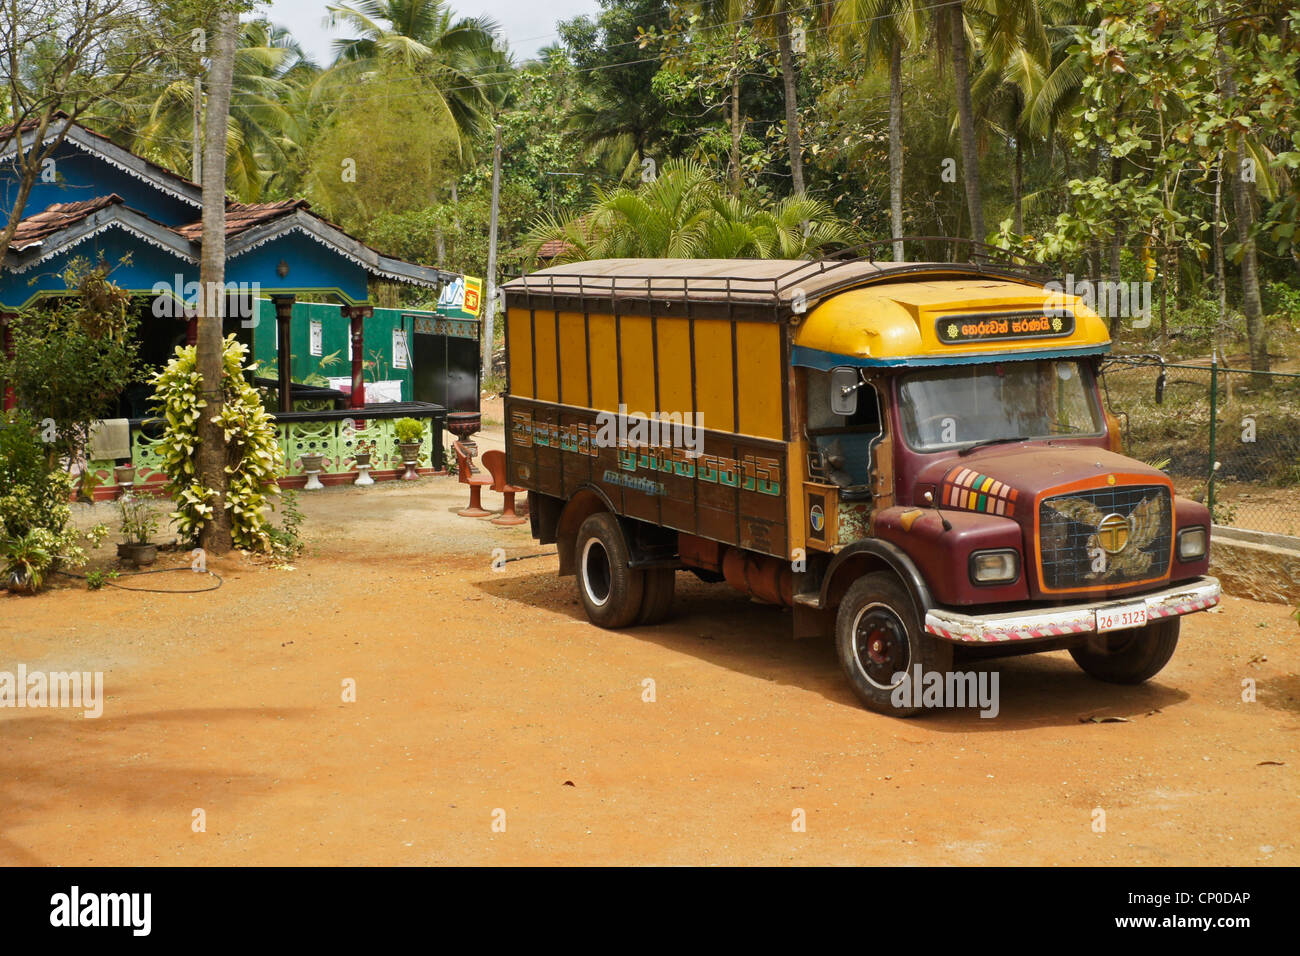 Colorful house and truck, Sri Lanka Stock Photo